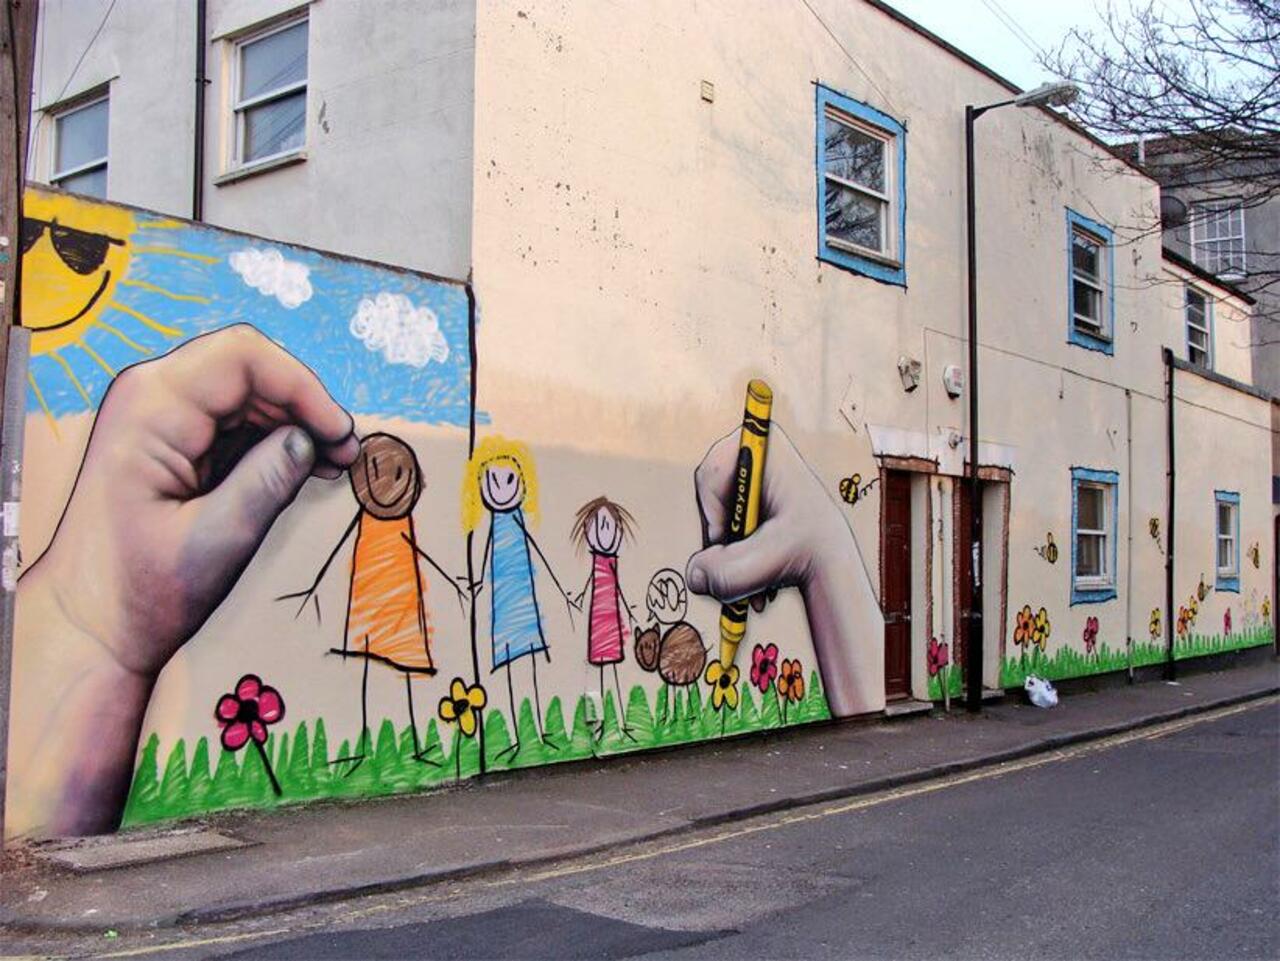 "@Pitchuskita: Done Ad
Bristol
#streetart #art #graffiti #mural http://t.co/PudVzyBVIa"